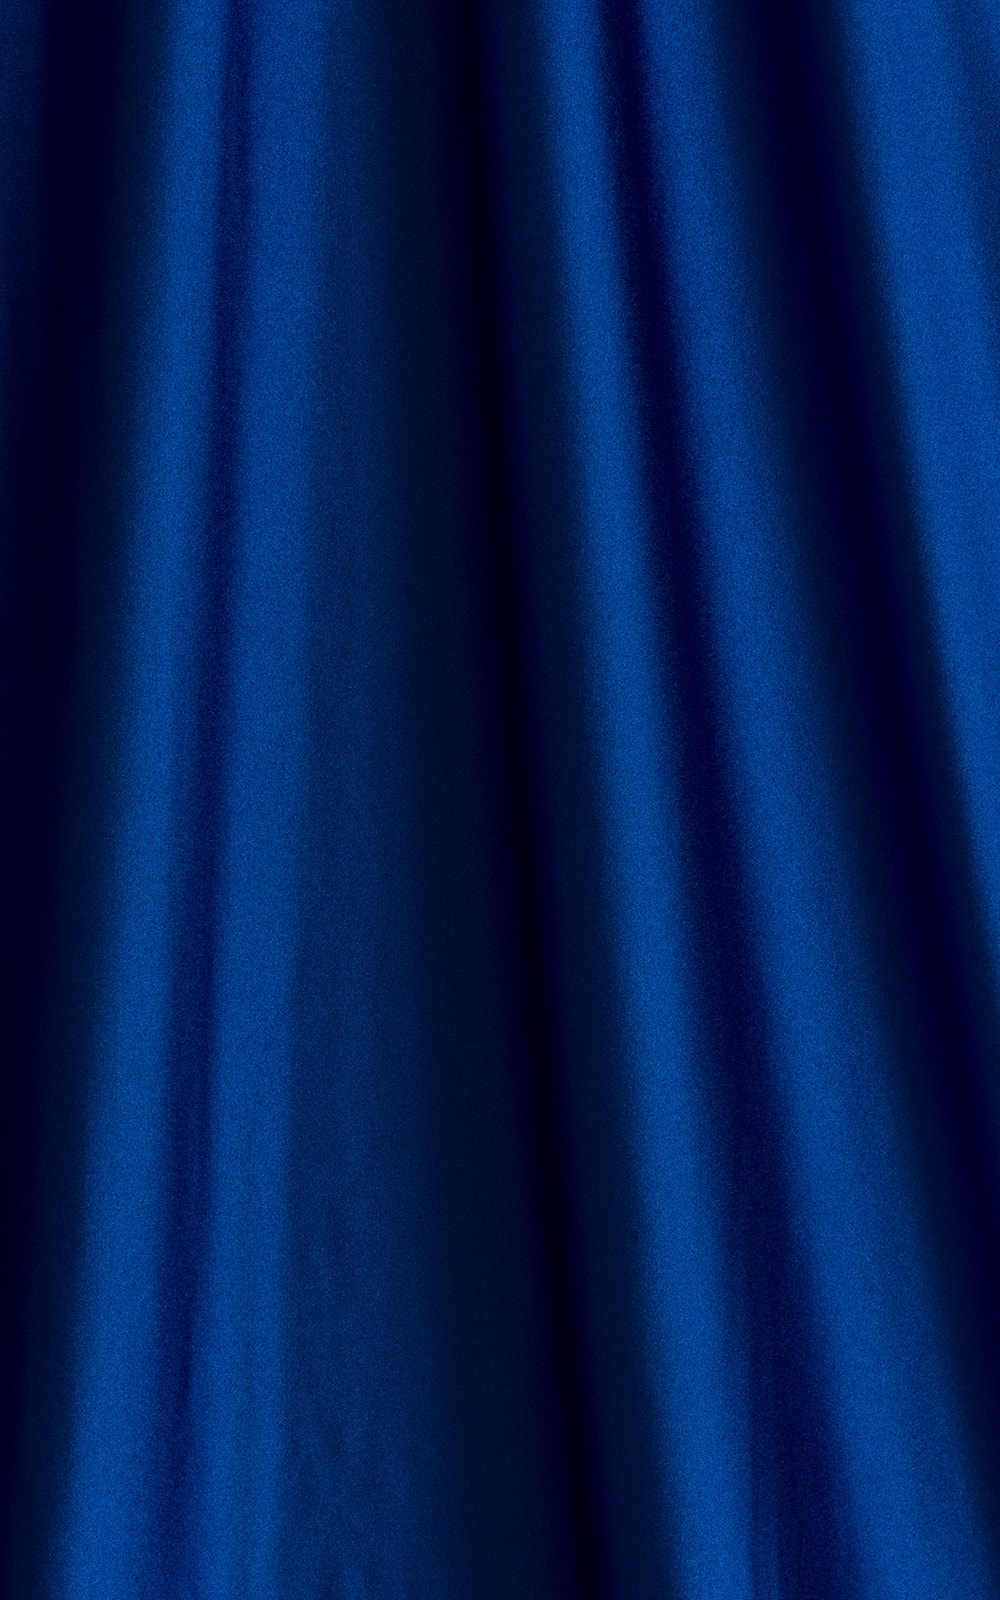 Teardrop G String Micro Bikini Bottom in Imperial Blue Fabric